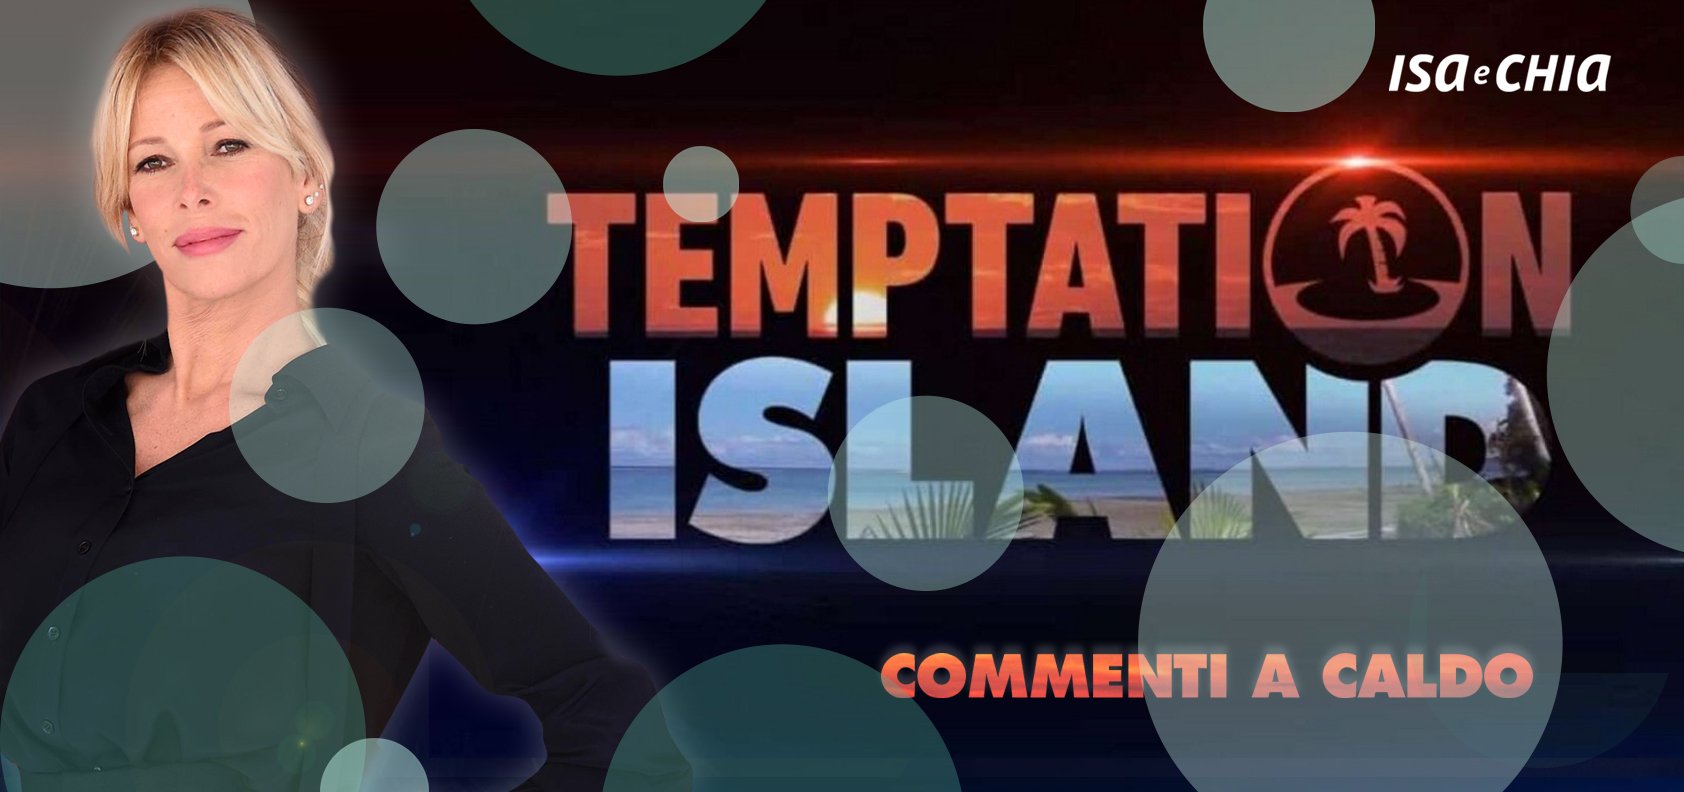 ‘Temptation Island 8’, quarta puntata: commenti a caldo